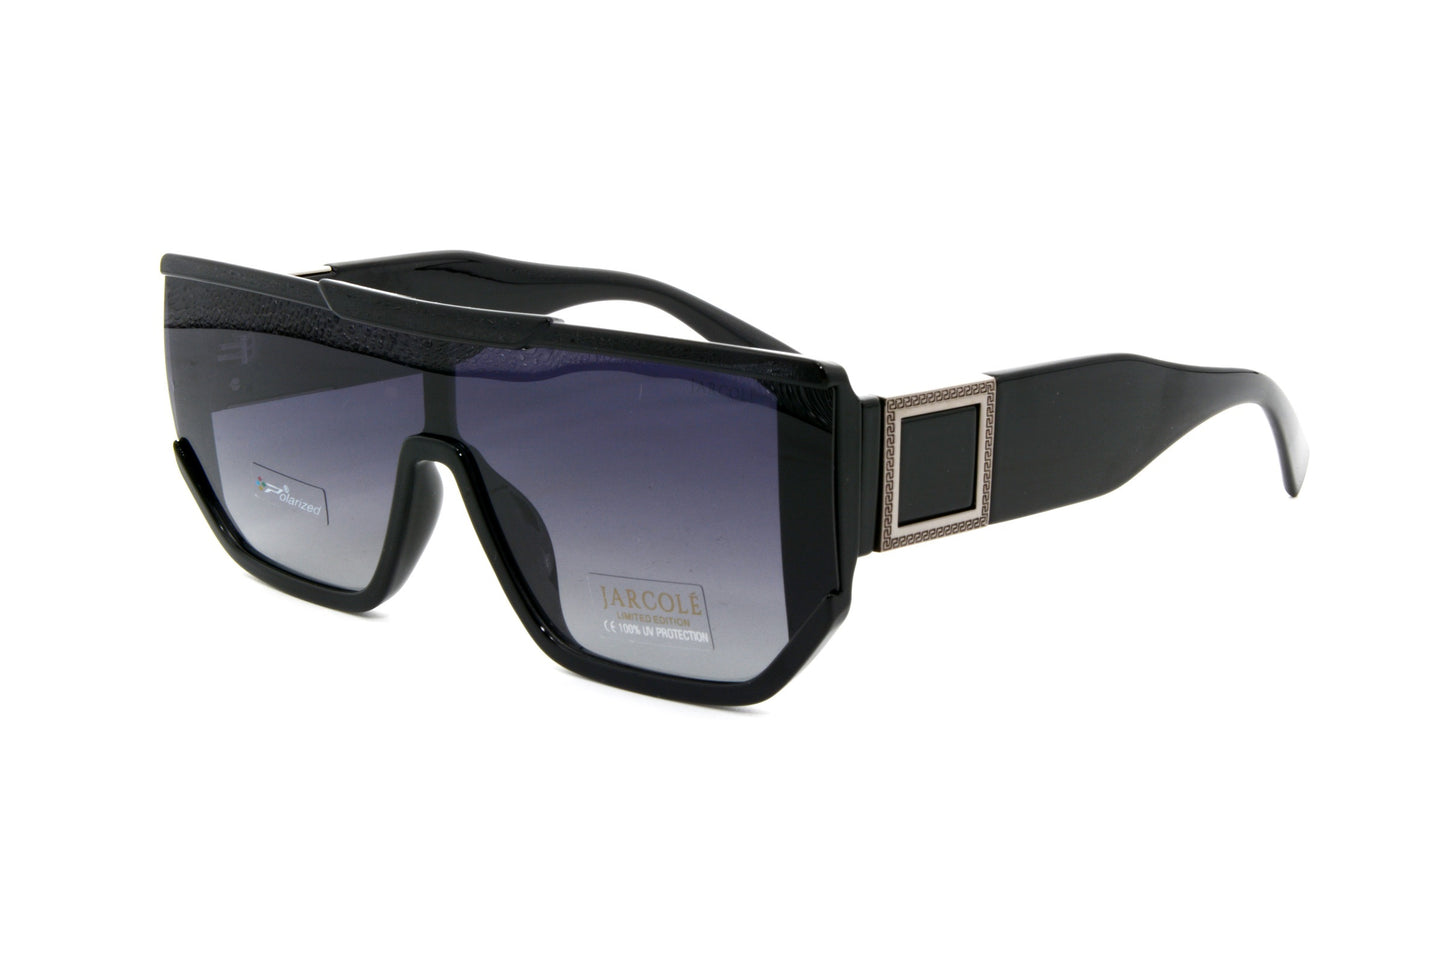 Jarcole sunglasses JR7608 001-G1